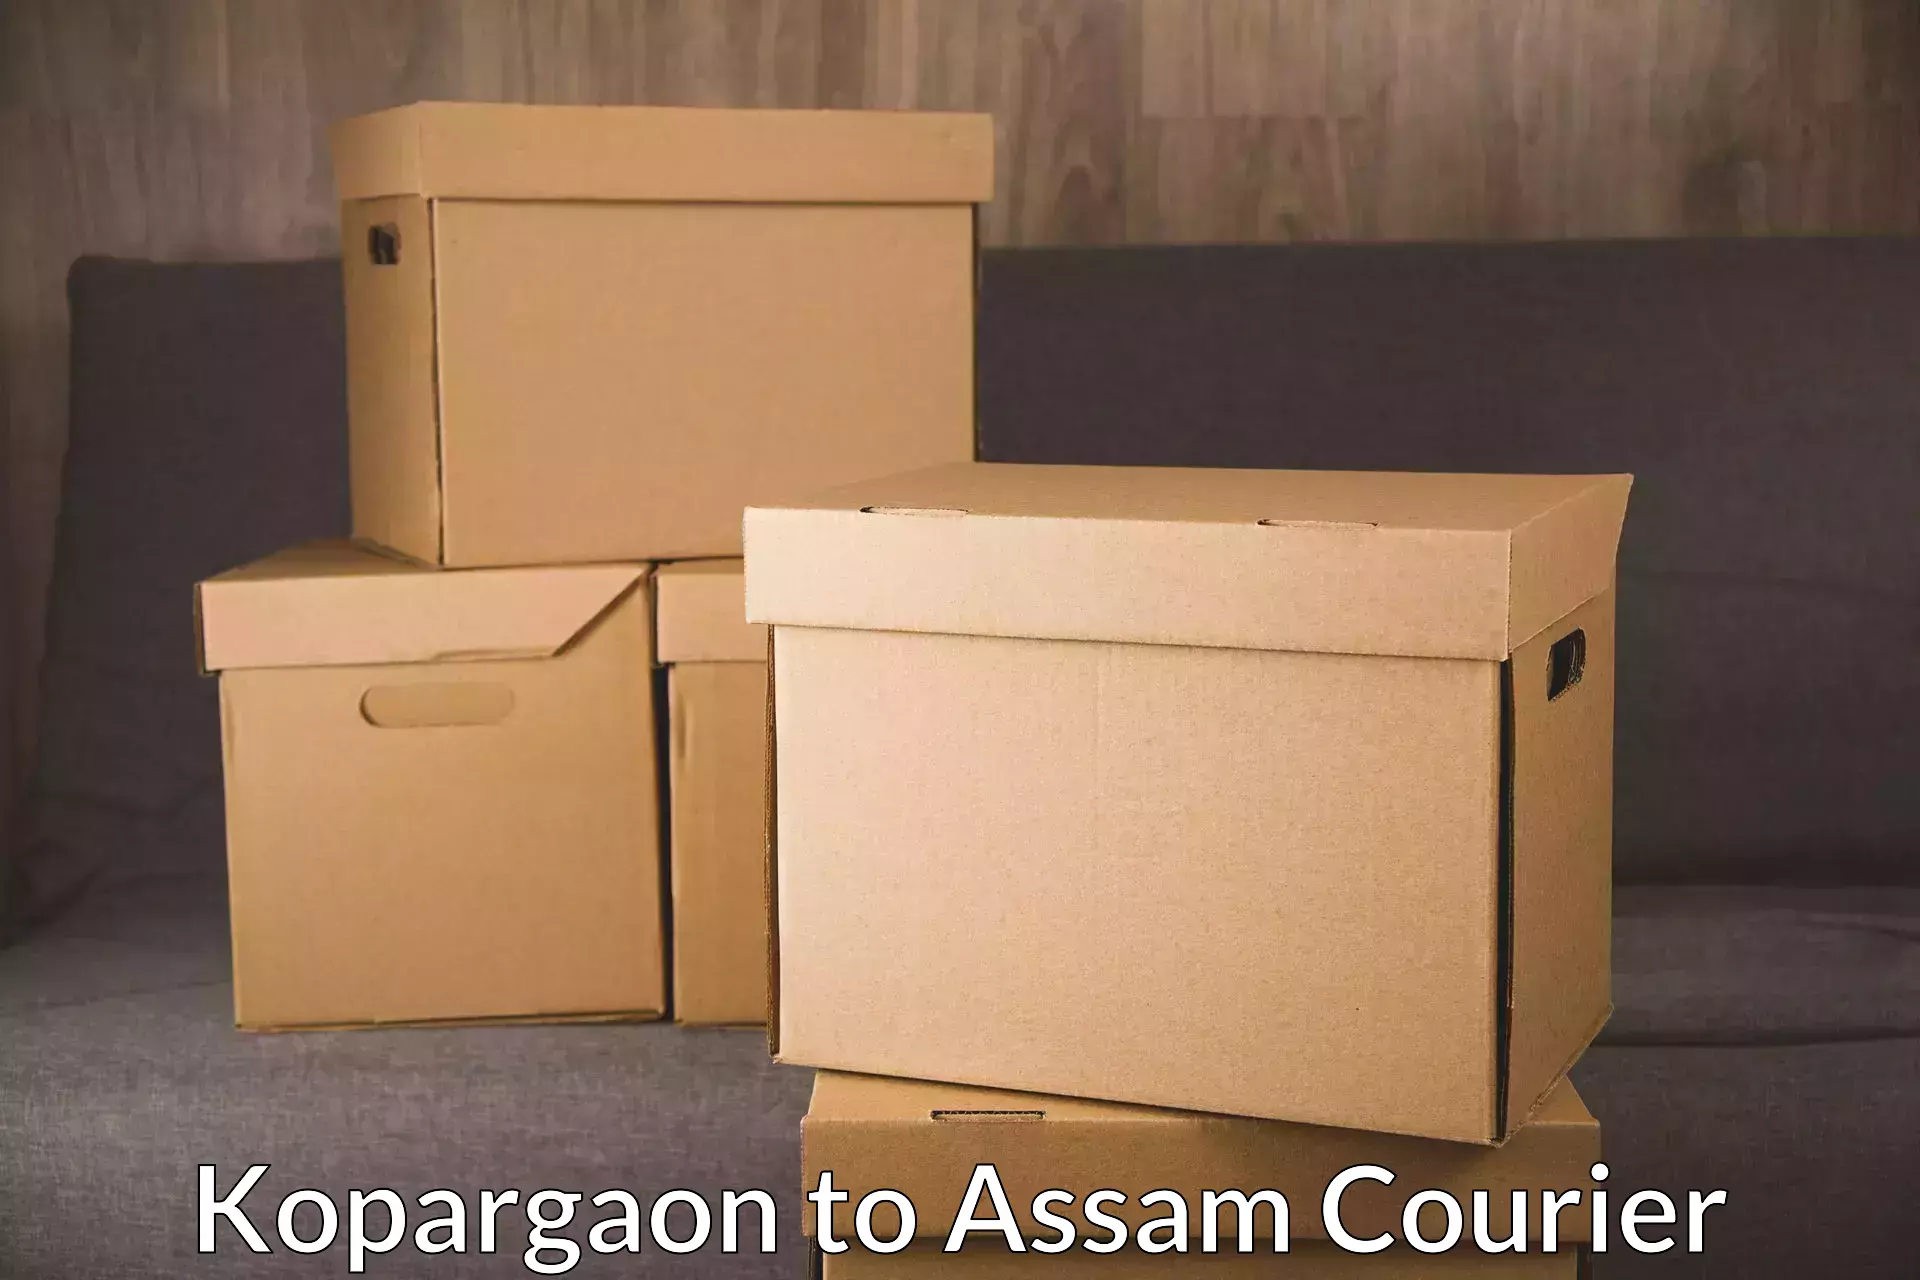 International parcel service Kopargaon to Nagaon